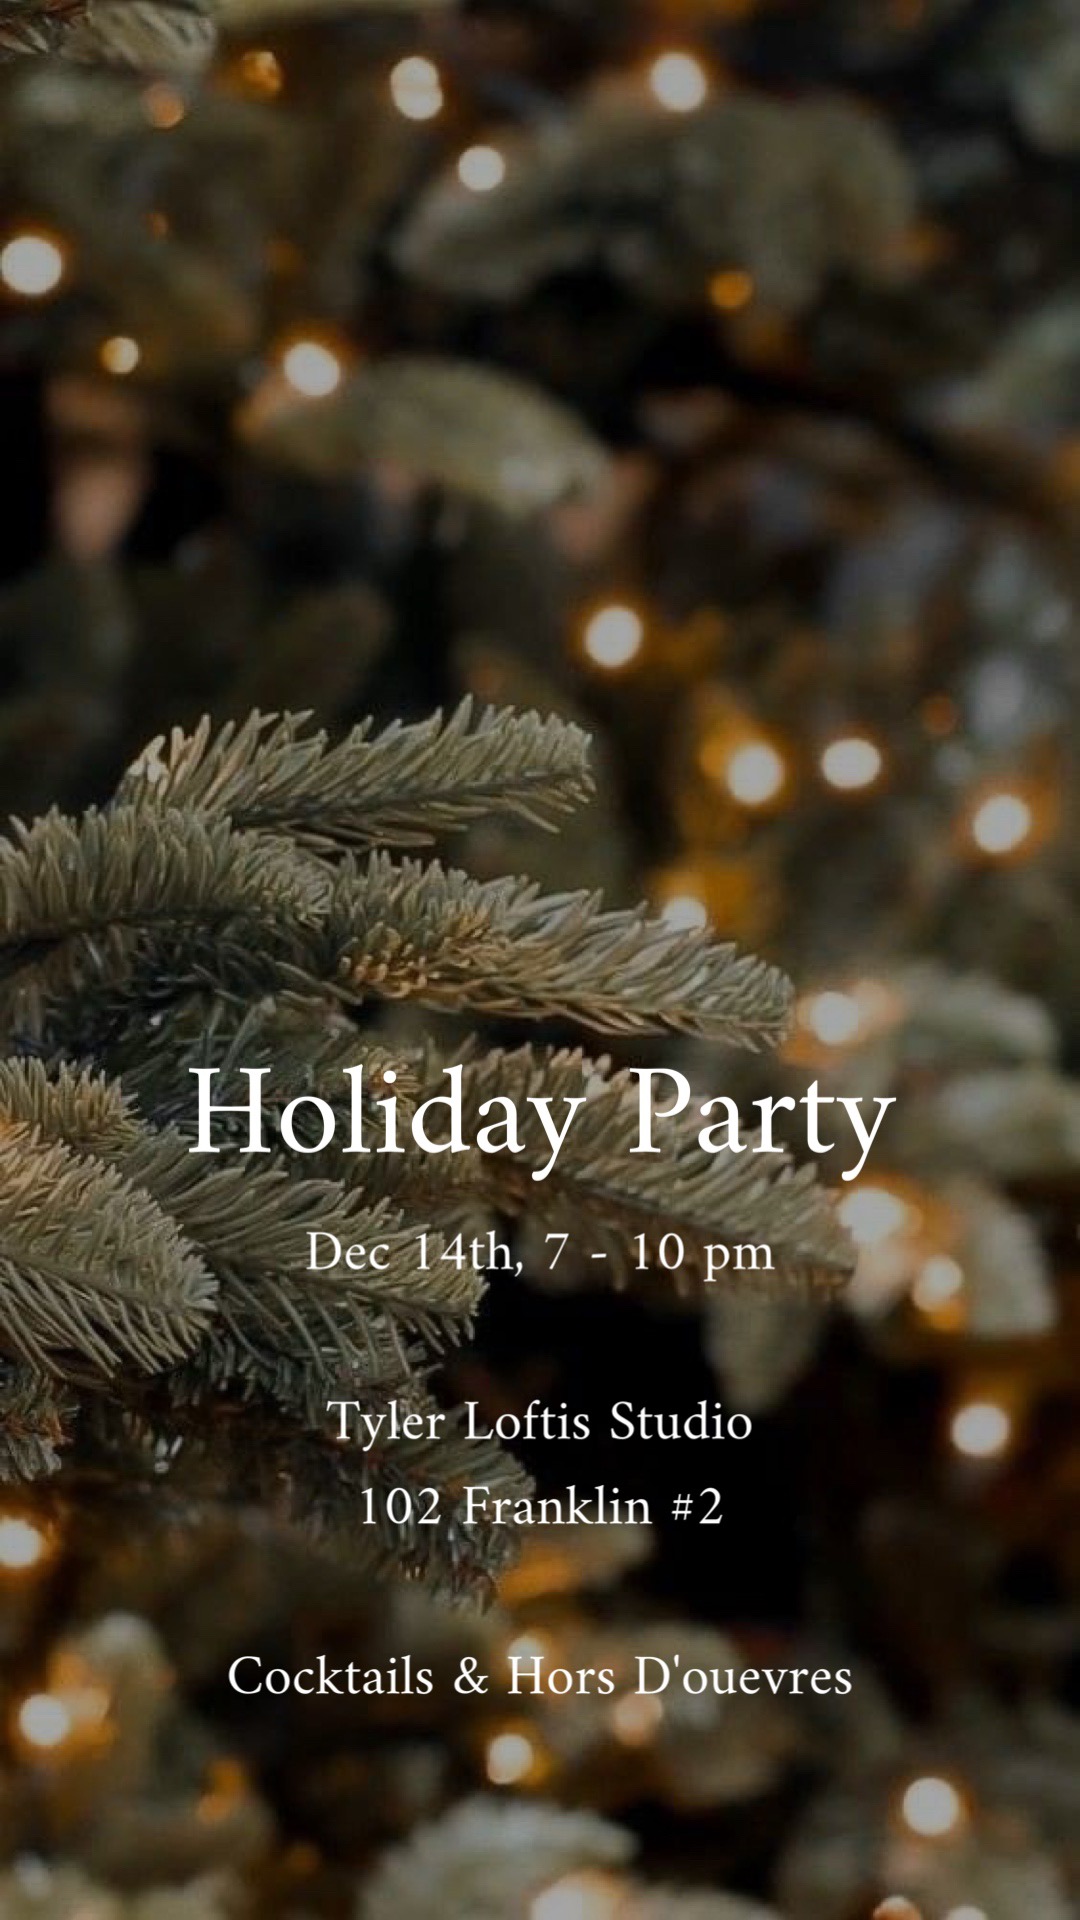 Tyler Loftis Studio Holiday Party